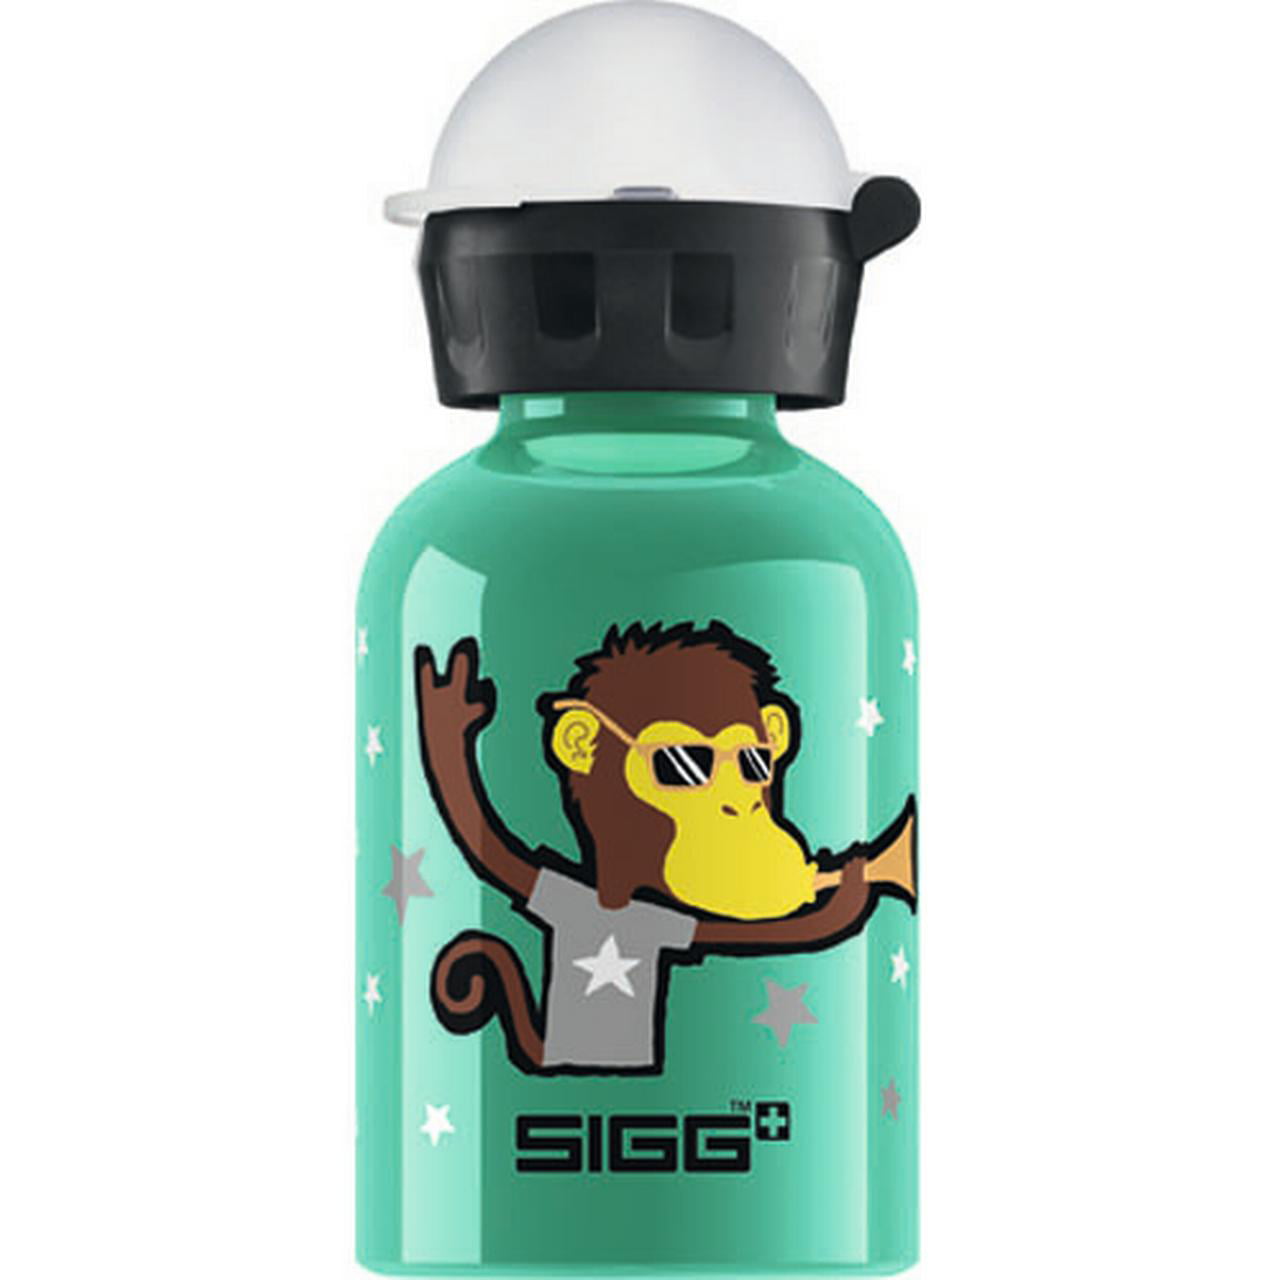 Tony Hawk SIGG Yellow Travel Sports Water Bottle Birdman Design New 